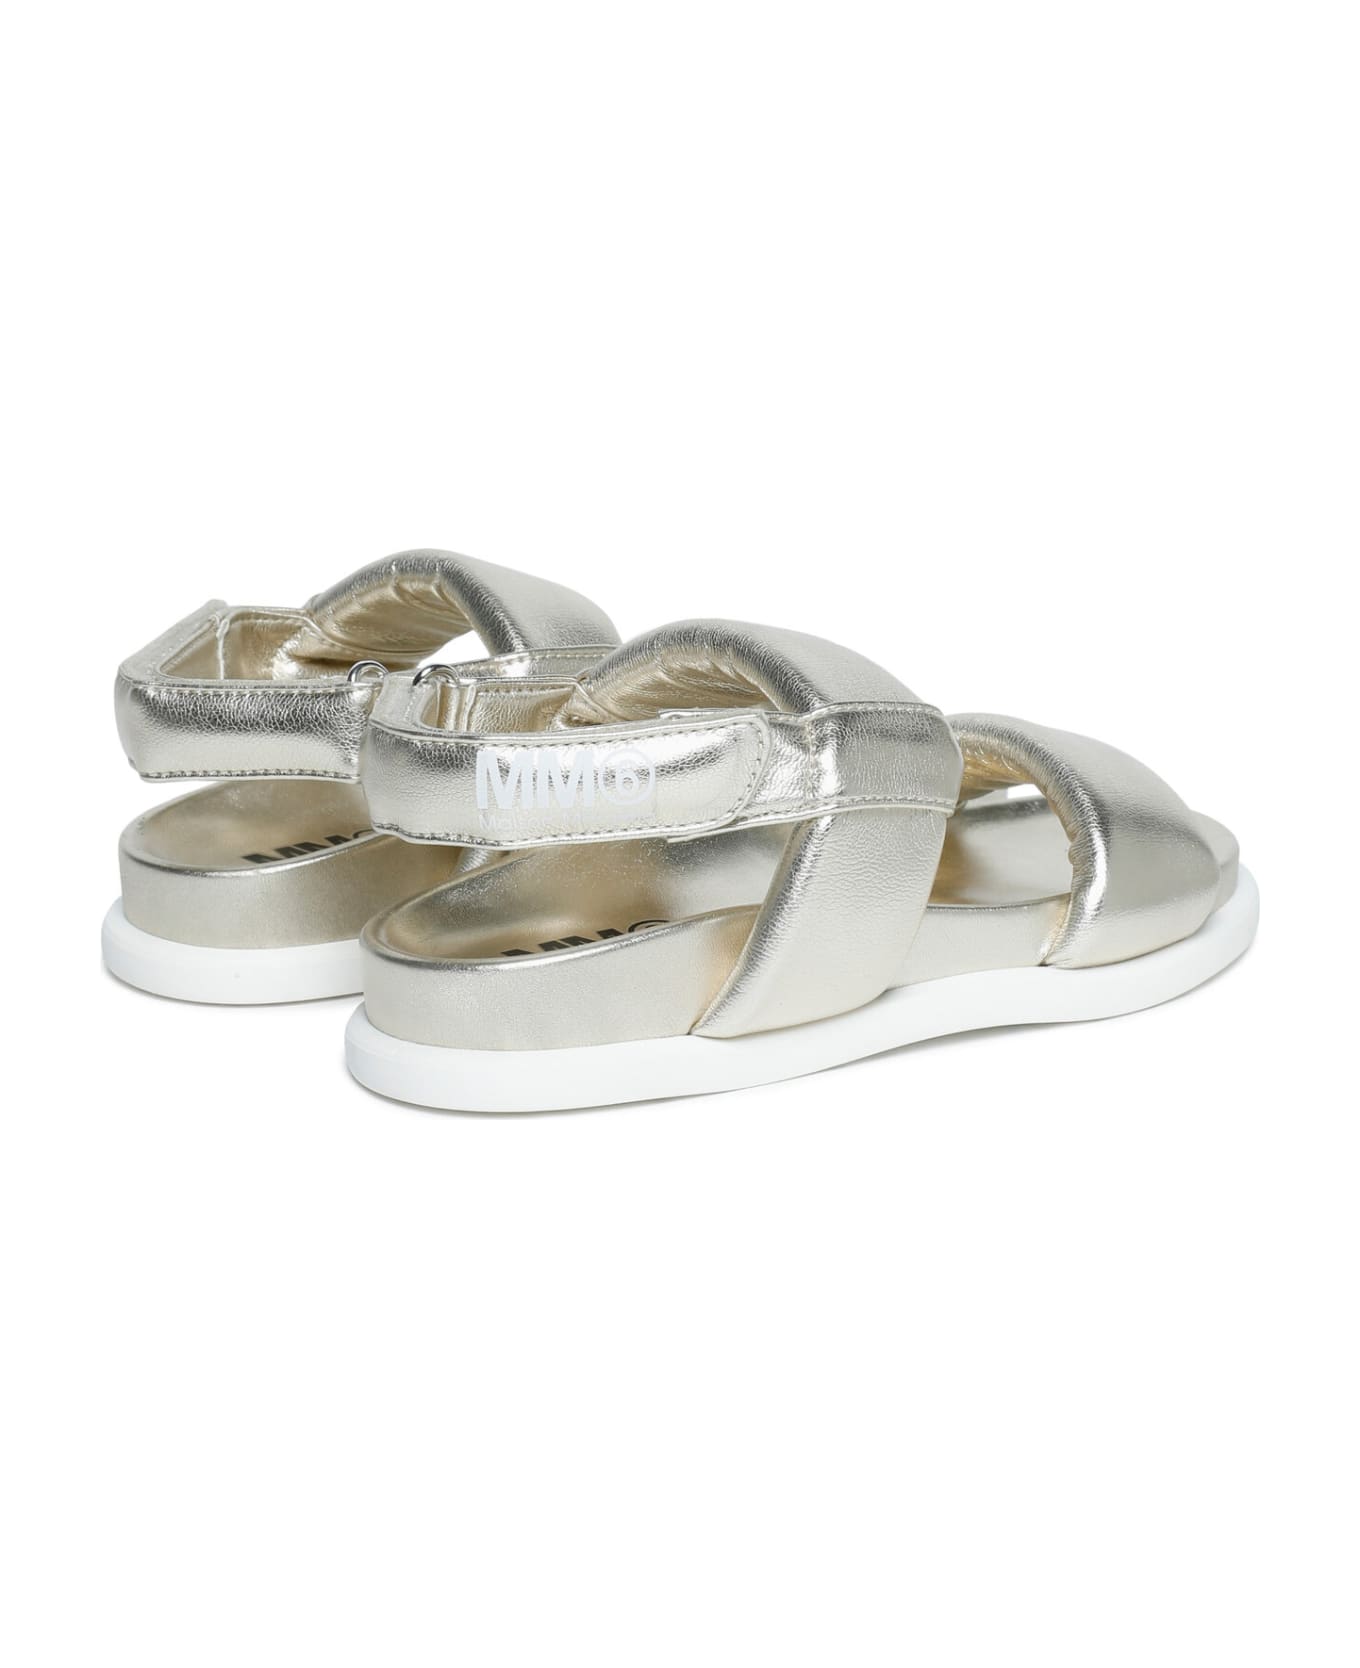 MM6 Maison Margiela Mt73386 Var2 Sandals Maison Margiela Gold Leather Padded Fussbett Sandals - Platinum